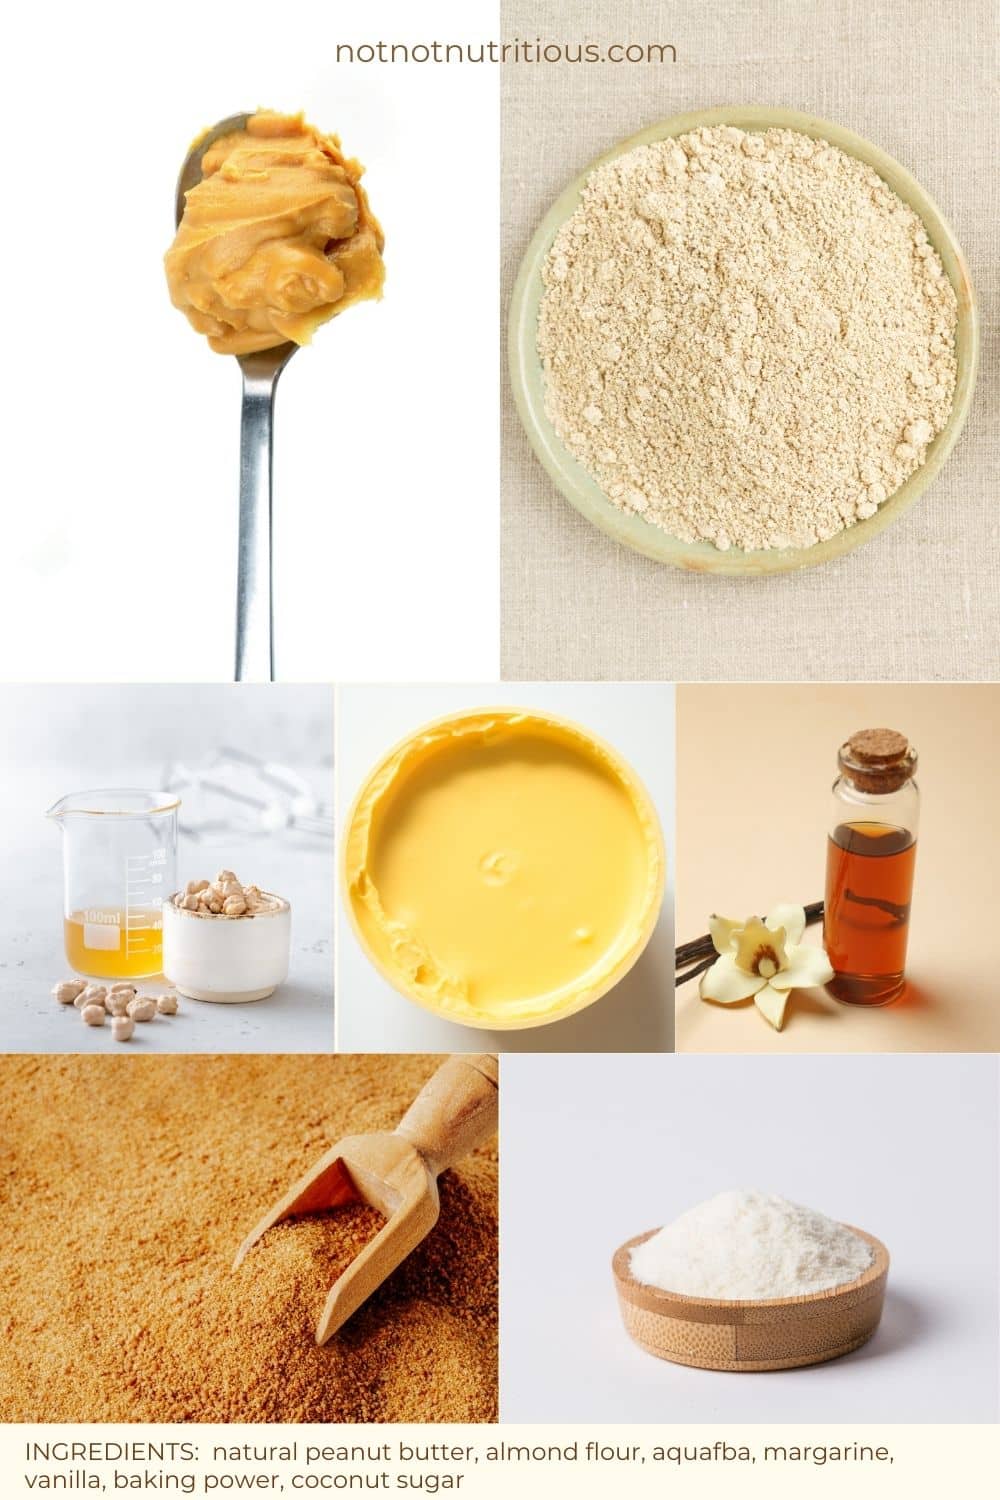 Ingredients of 1-Bowl Peanut Butter Cookies: natural peanut butter, almond flour, aquafaba, margarine, vanilla, coconut sugar, baking powder